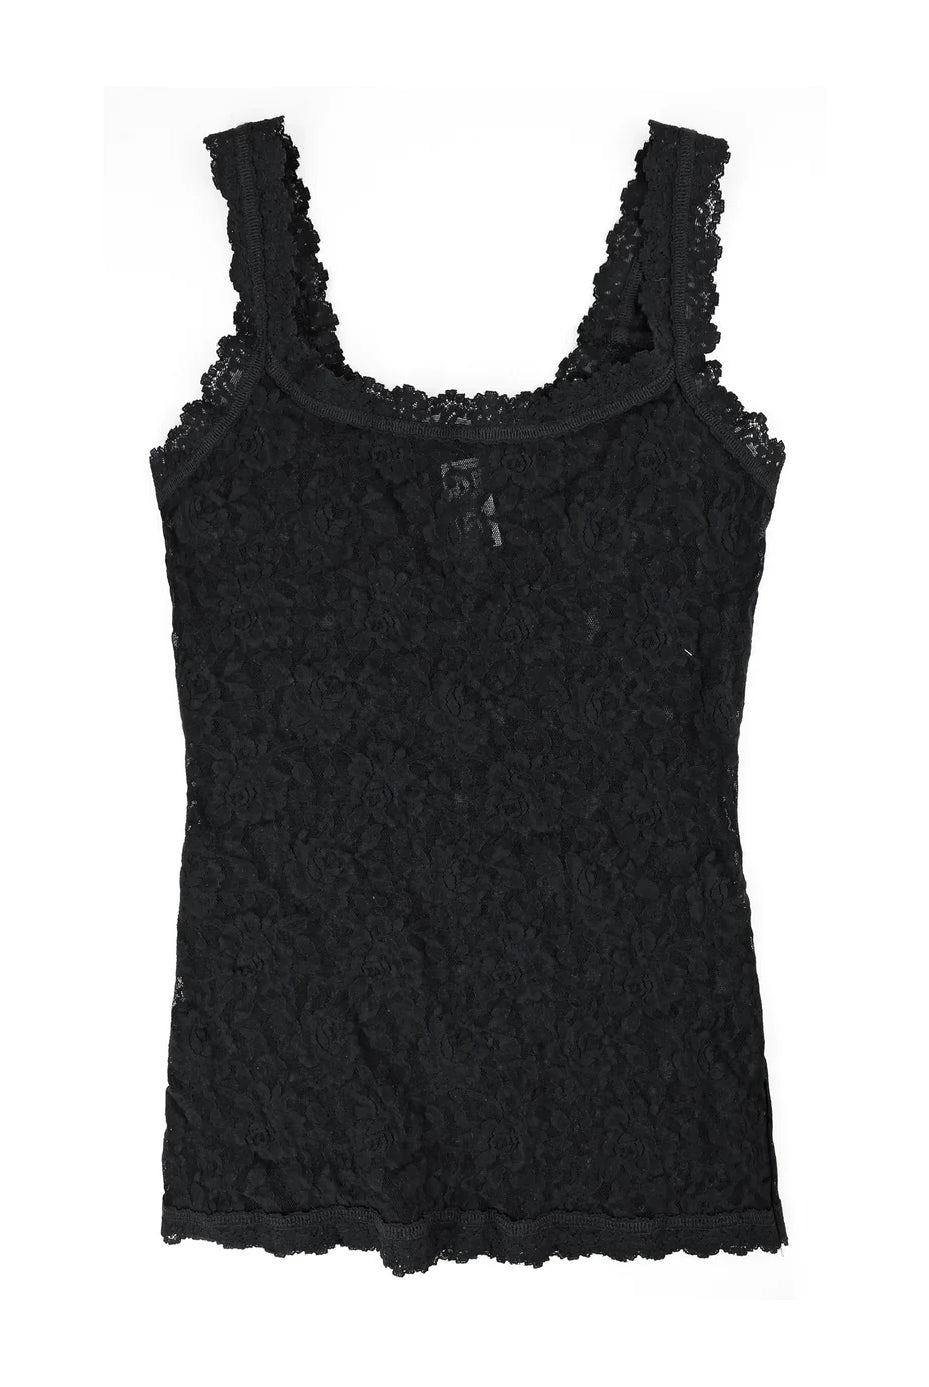 Signature Lace Classic Cami - Black - Flirt! Luxe Lingerie & Sleepwear